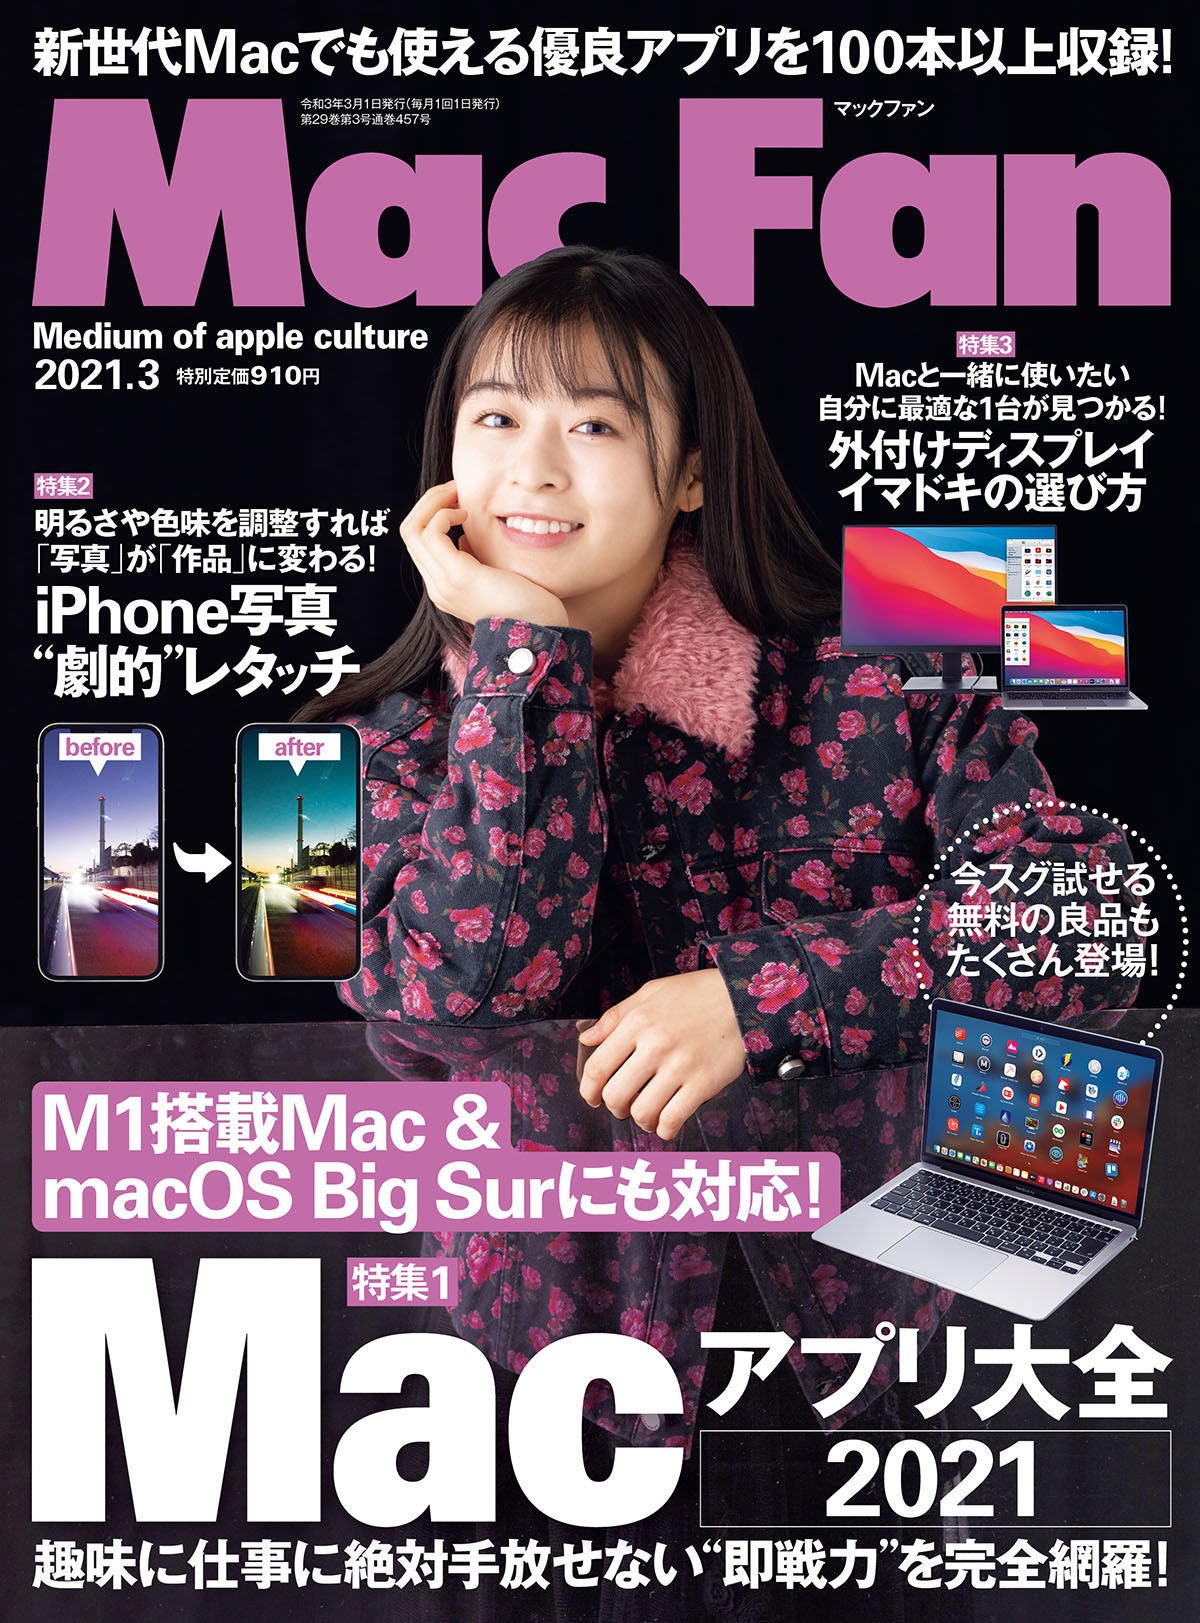 Mac Fan 3月号発売！ 特集は「Macアプリ大全2021」 マイナビニュース